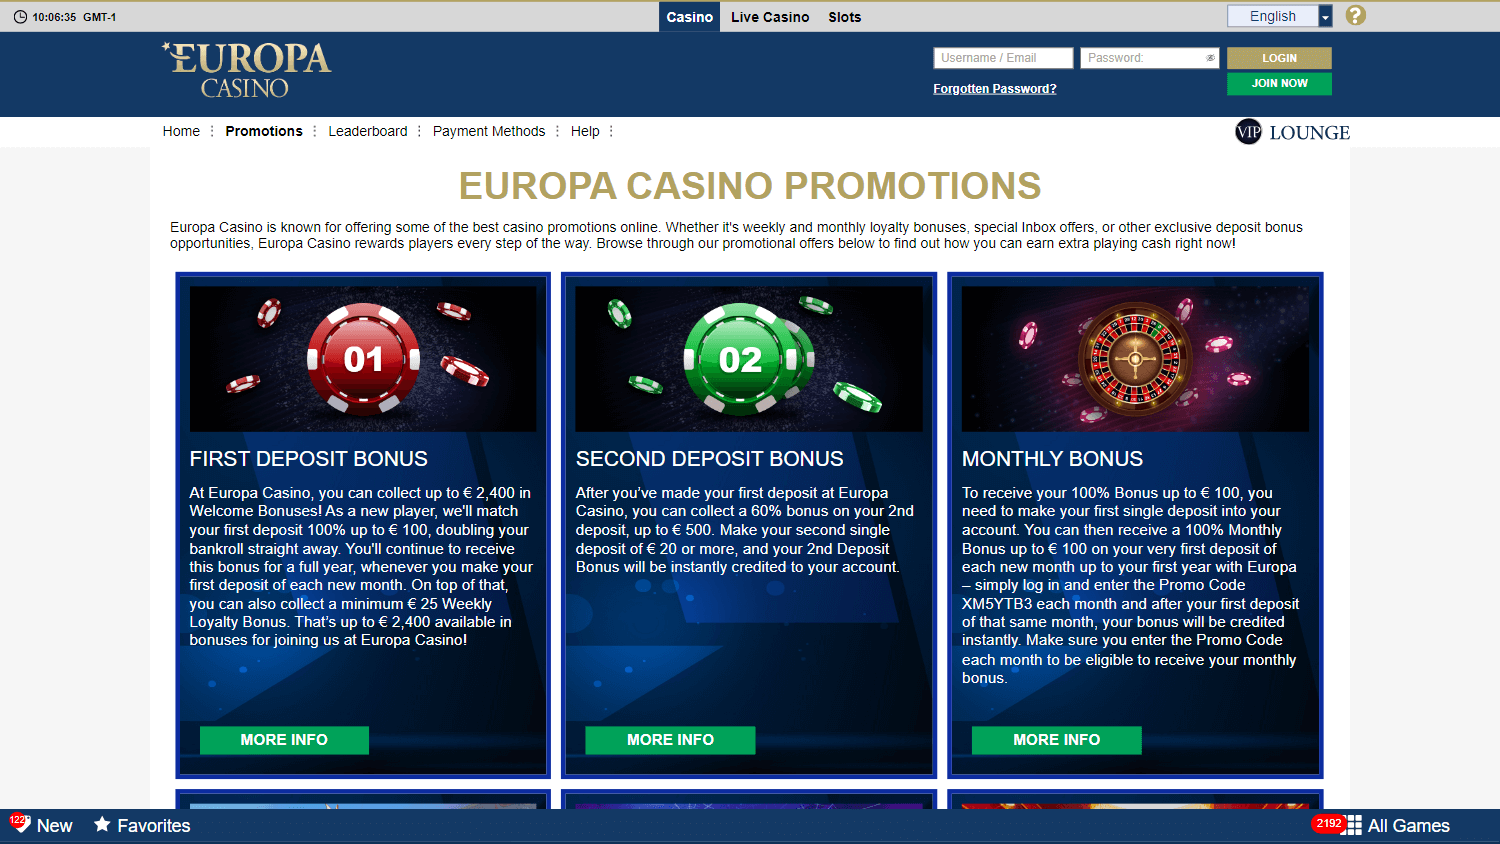 europa_casino_promotions_desktop